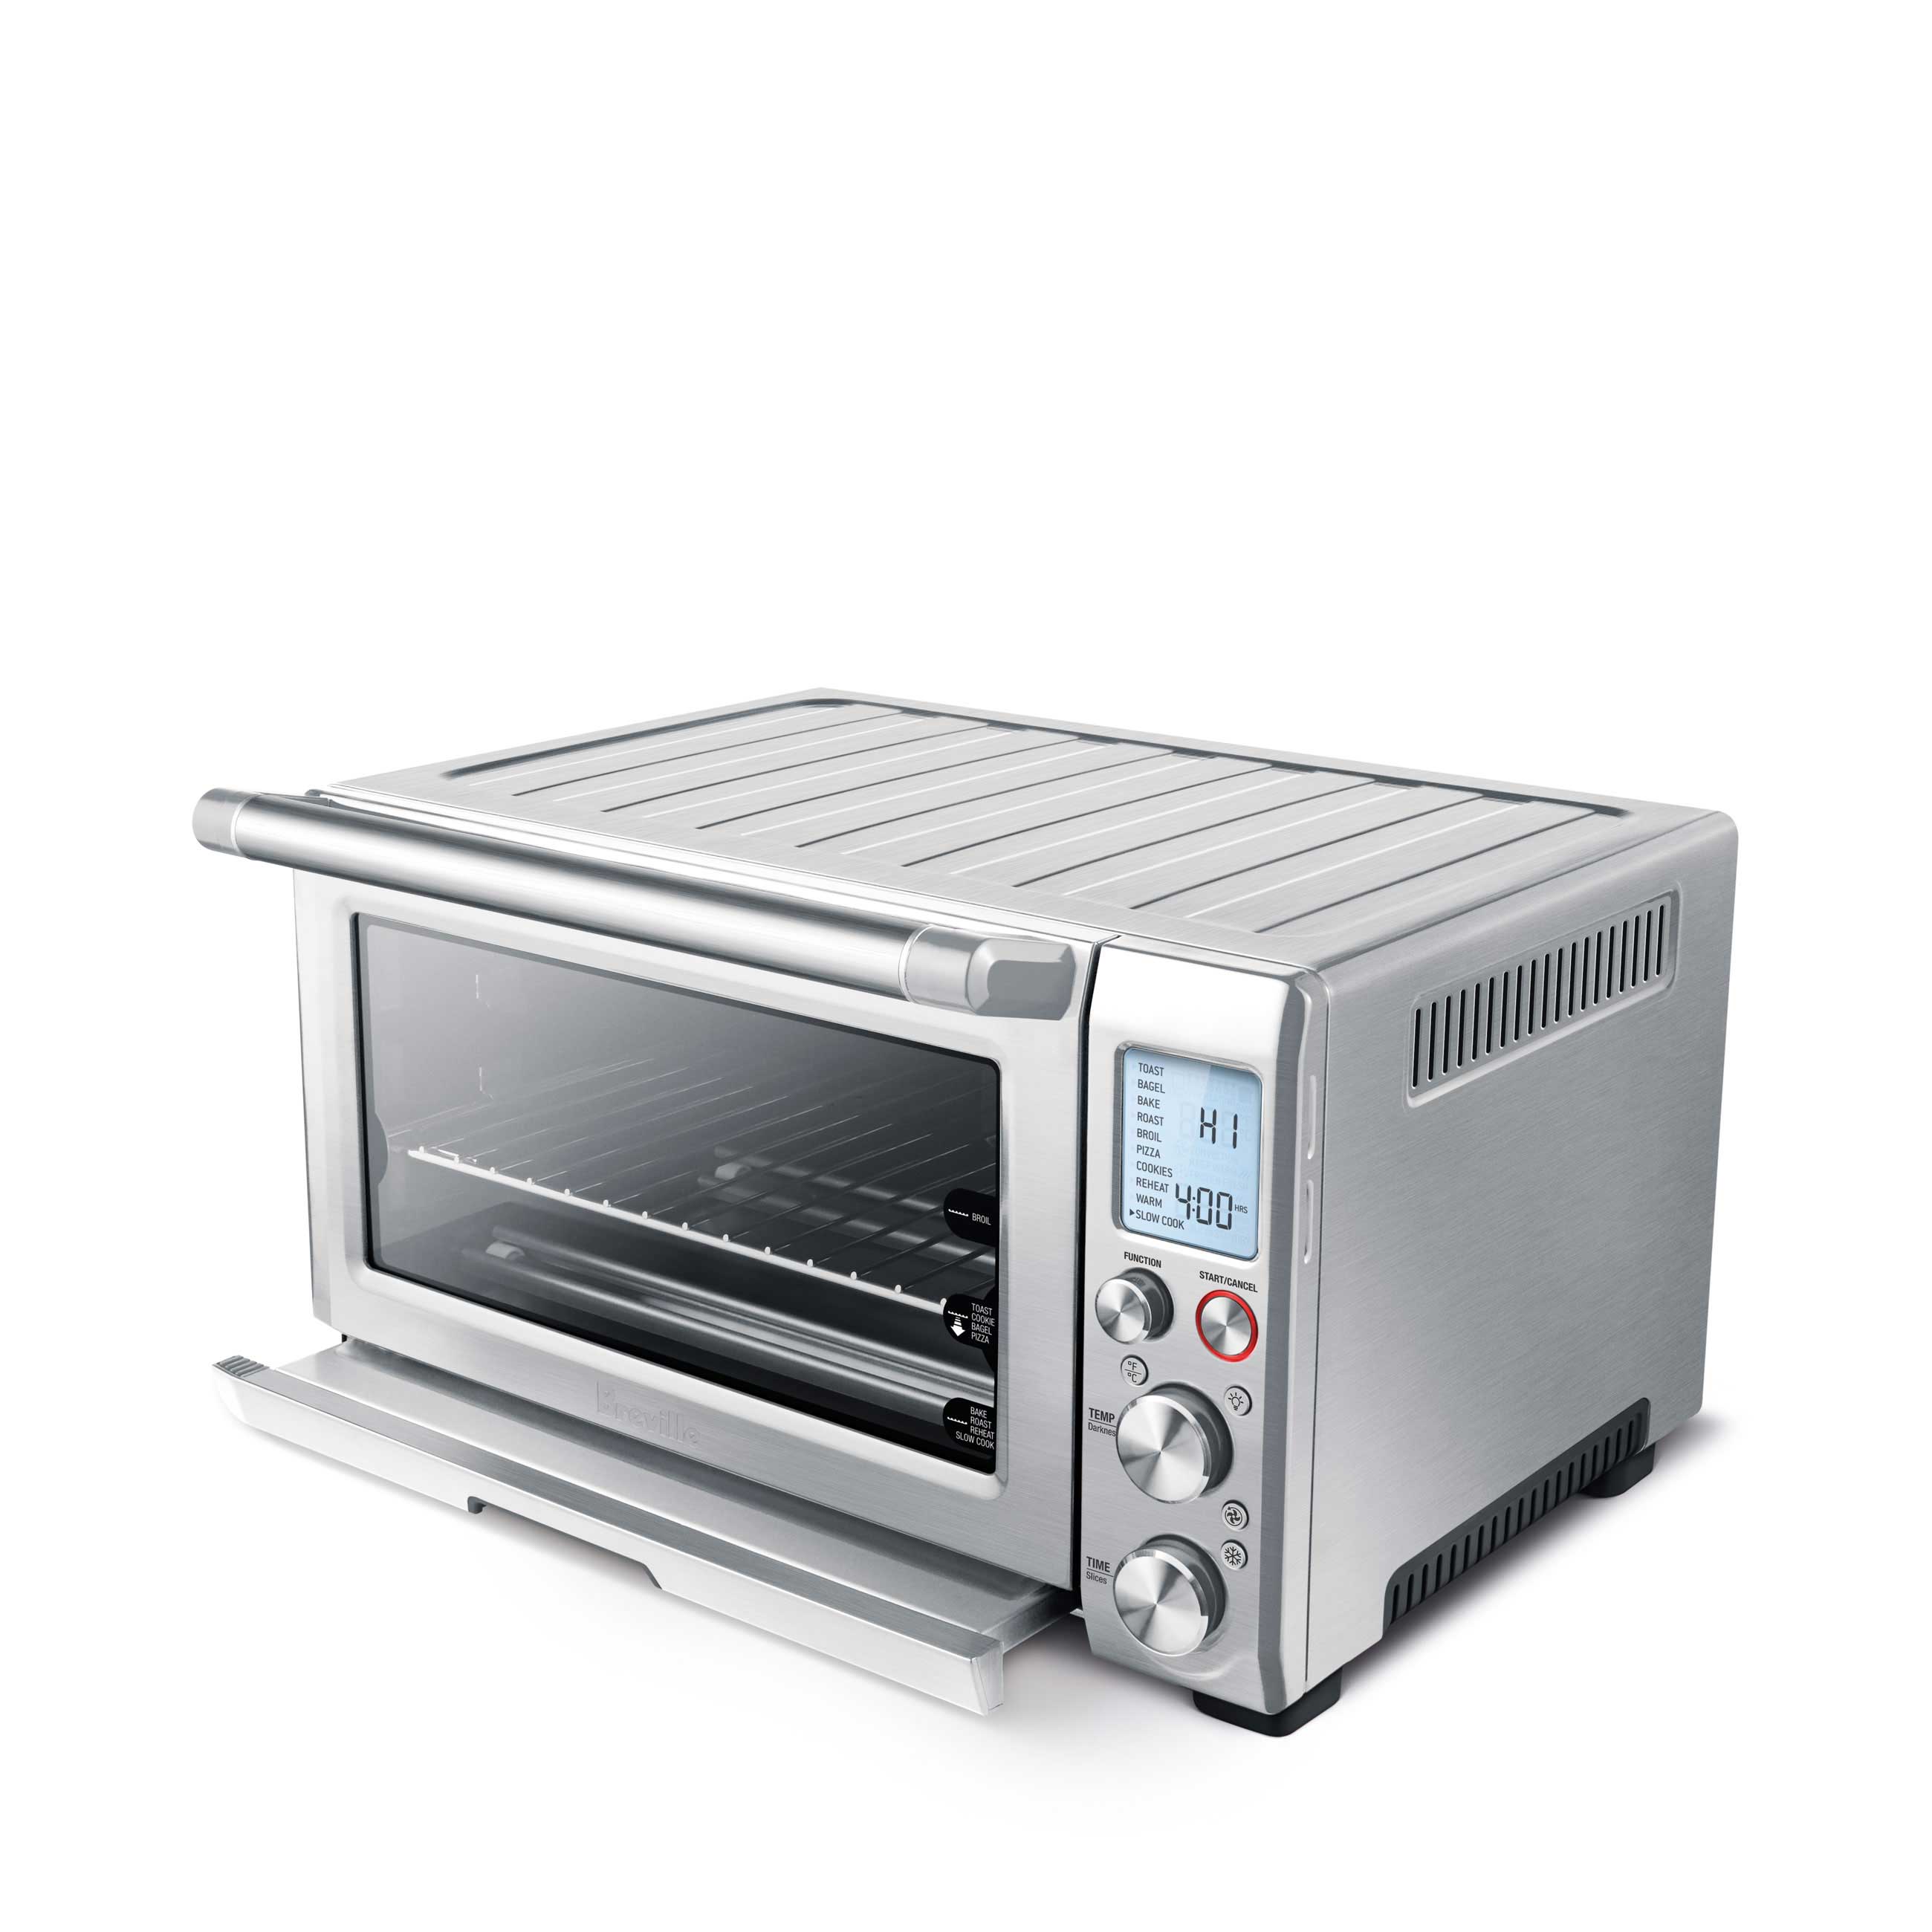 https://www.breville.com/content/dam/breville/ca/assets/ovens/finished-goods/bov845-the-smart-oven-pro/bov845bssusc-the-smart-oven-pro/images/BOV845BSSUSC-the-smart-oven-pro-cooking-ovens-carousel2.jpg